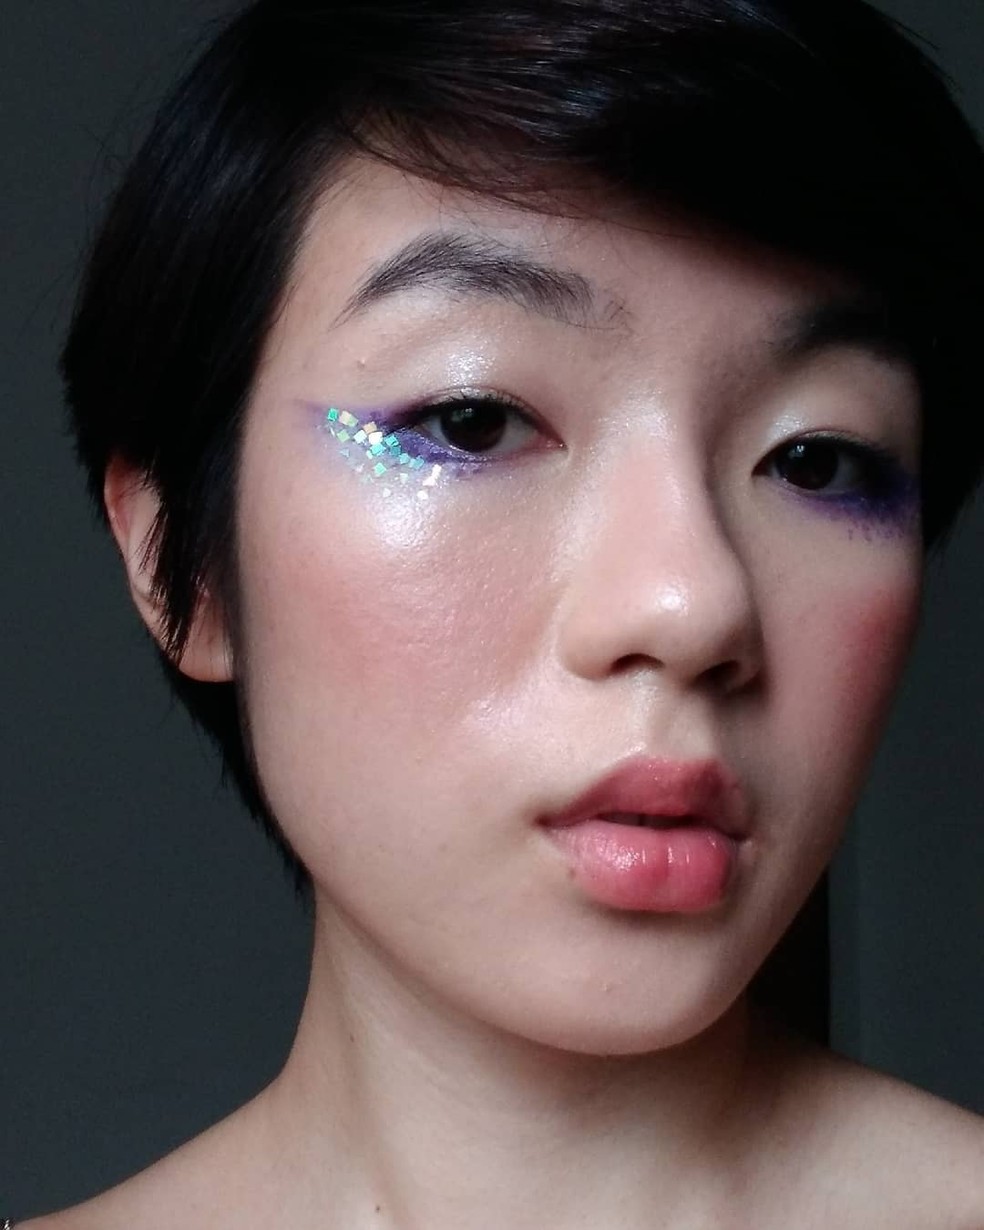 Maquiagem com glitter — Foto: Instagram @letharumi